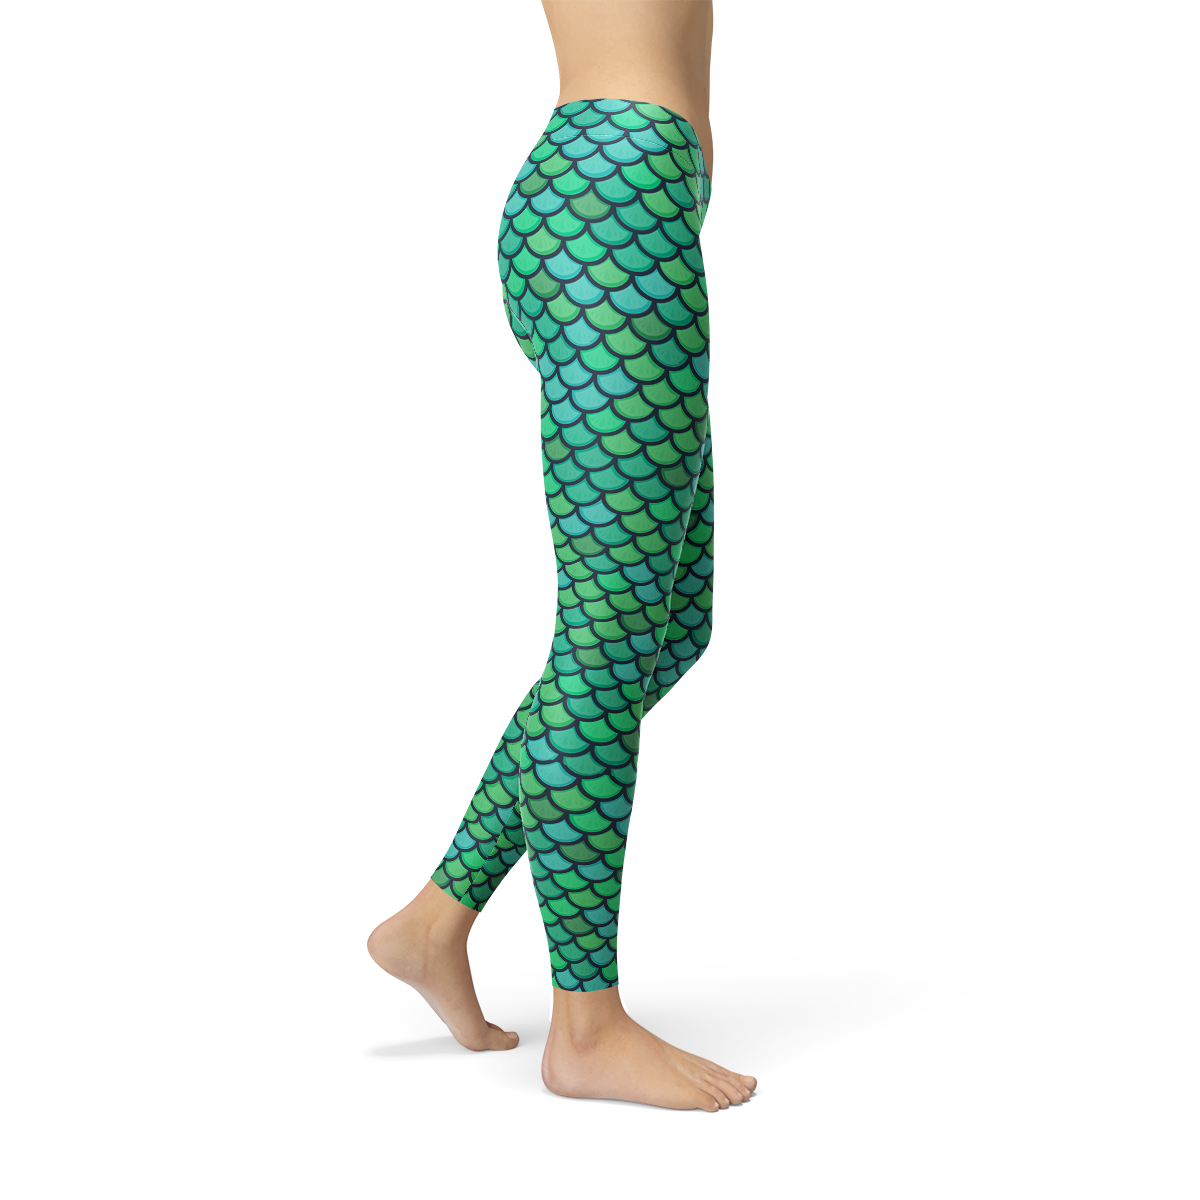 Green Mermaid Leggings Womens